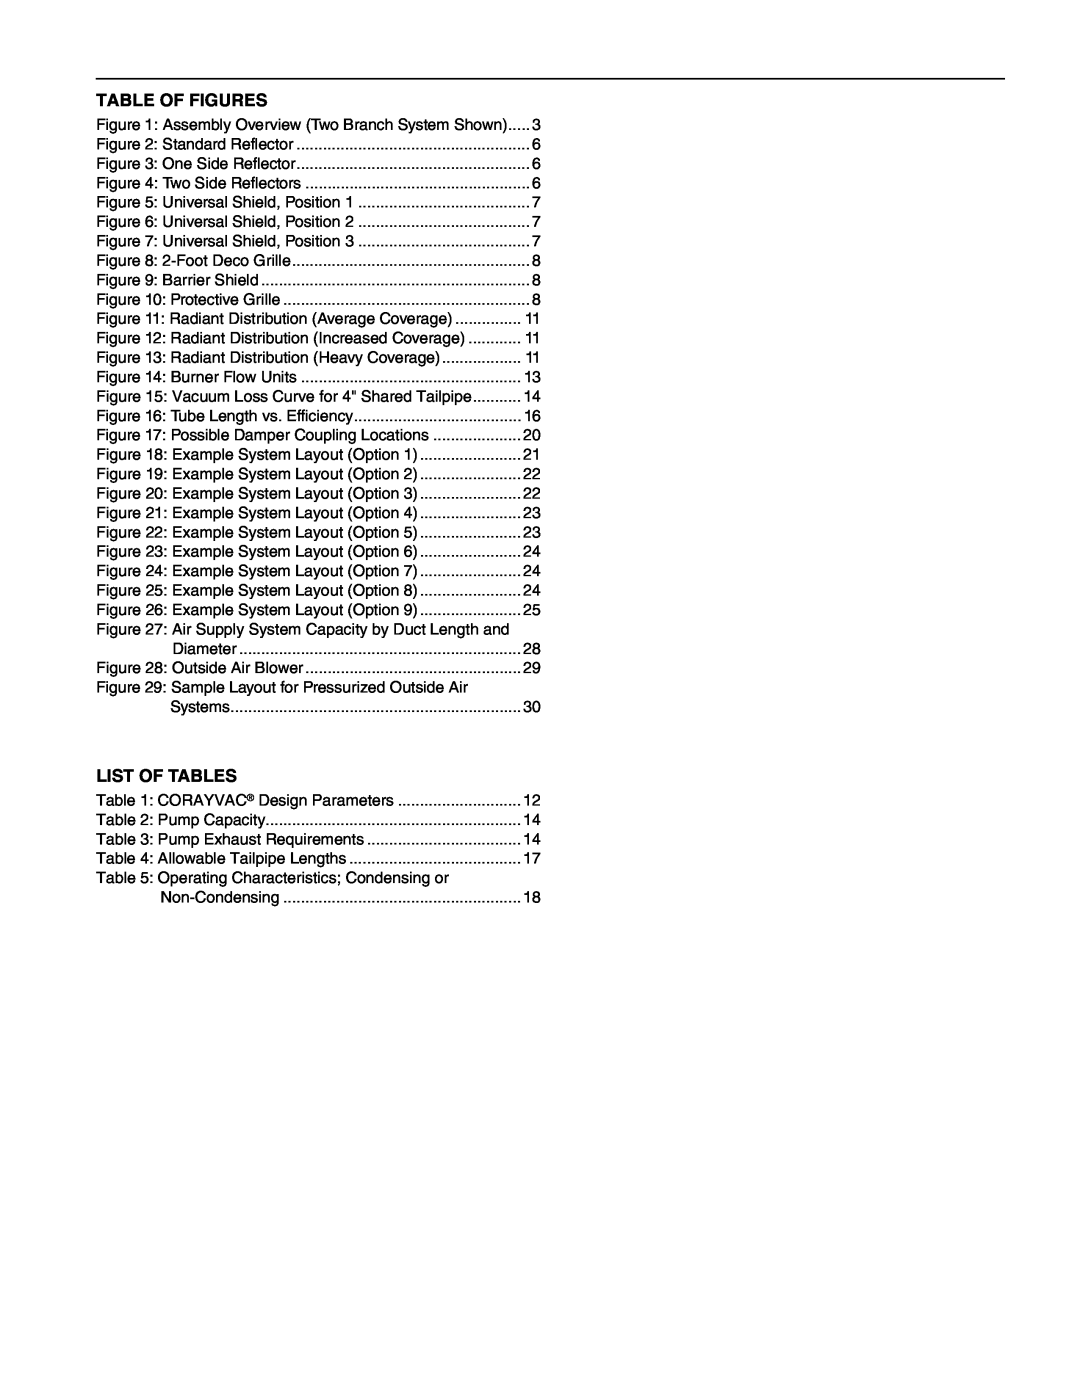 Roberts Gorden CRV-B-6, CRV-B-8, CRV-B-2, CRV-B-4 service manual Table Of Figures, List Of Tables 